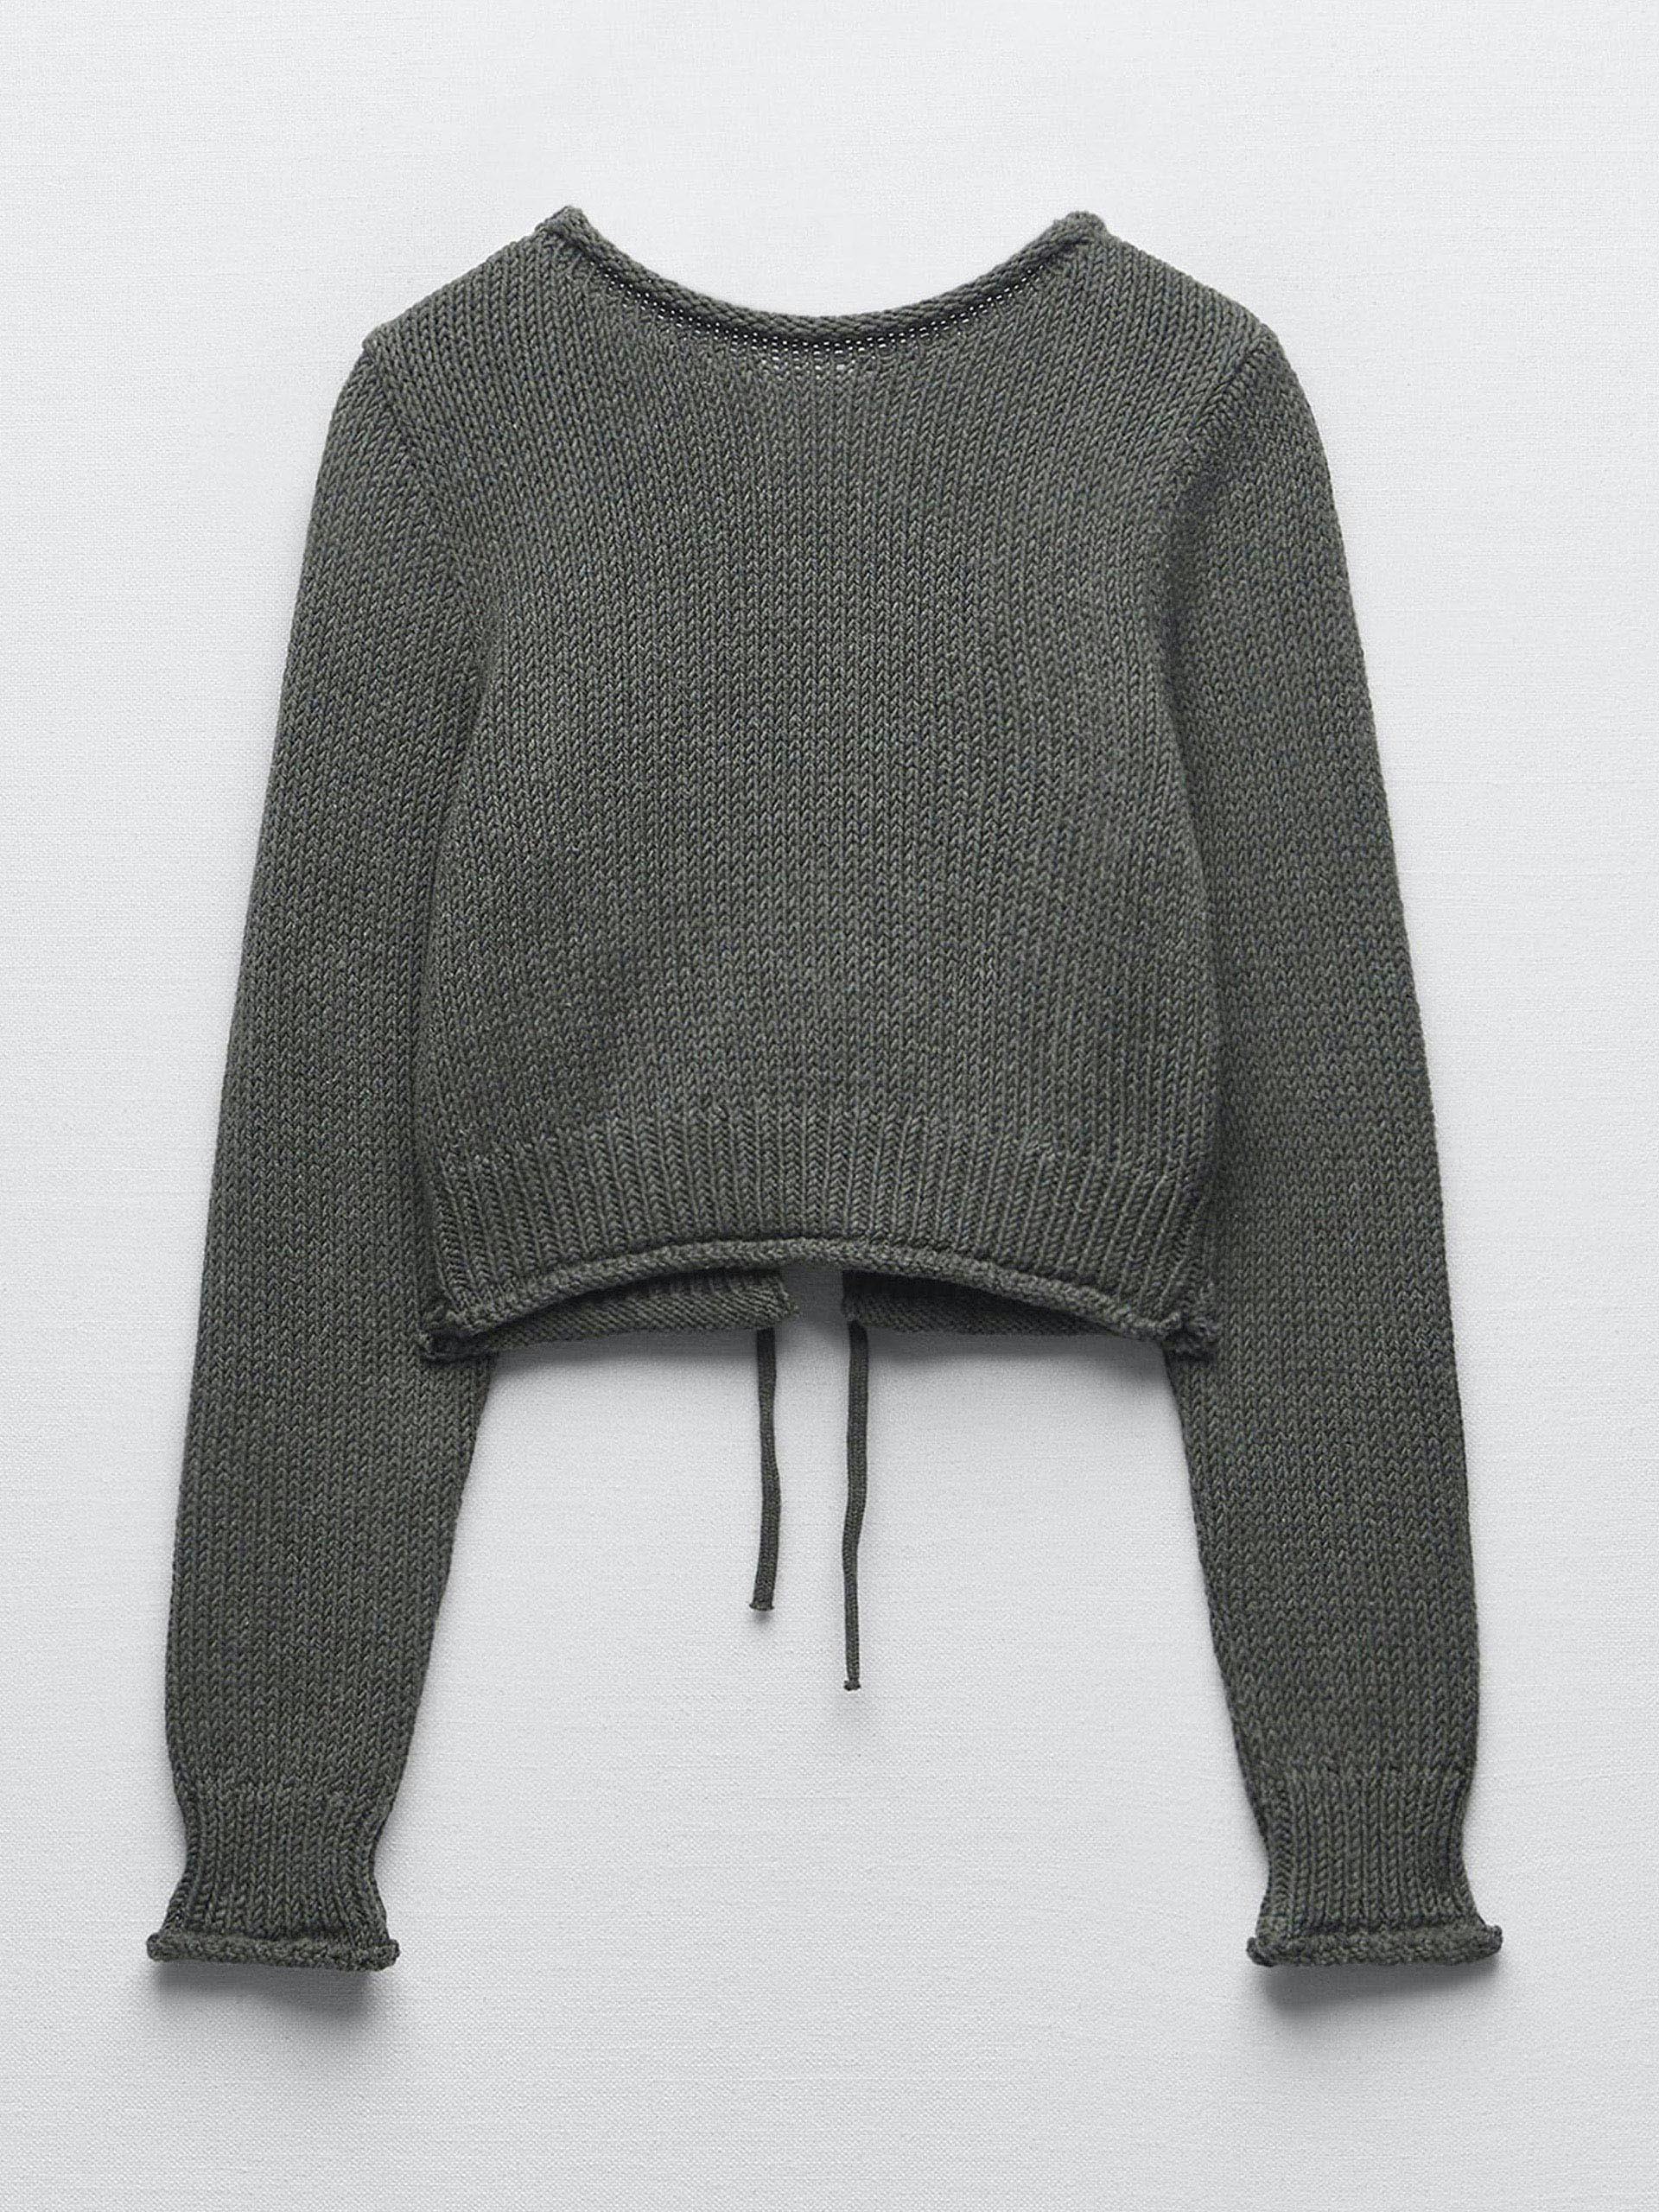 Cropped grey knit